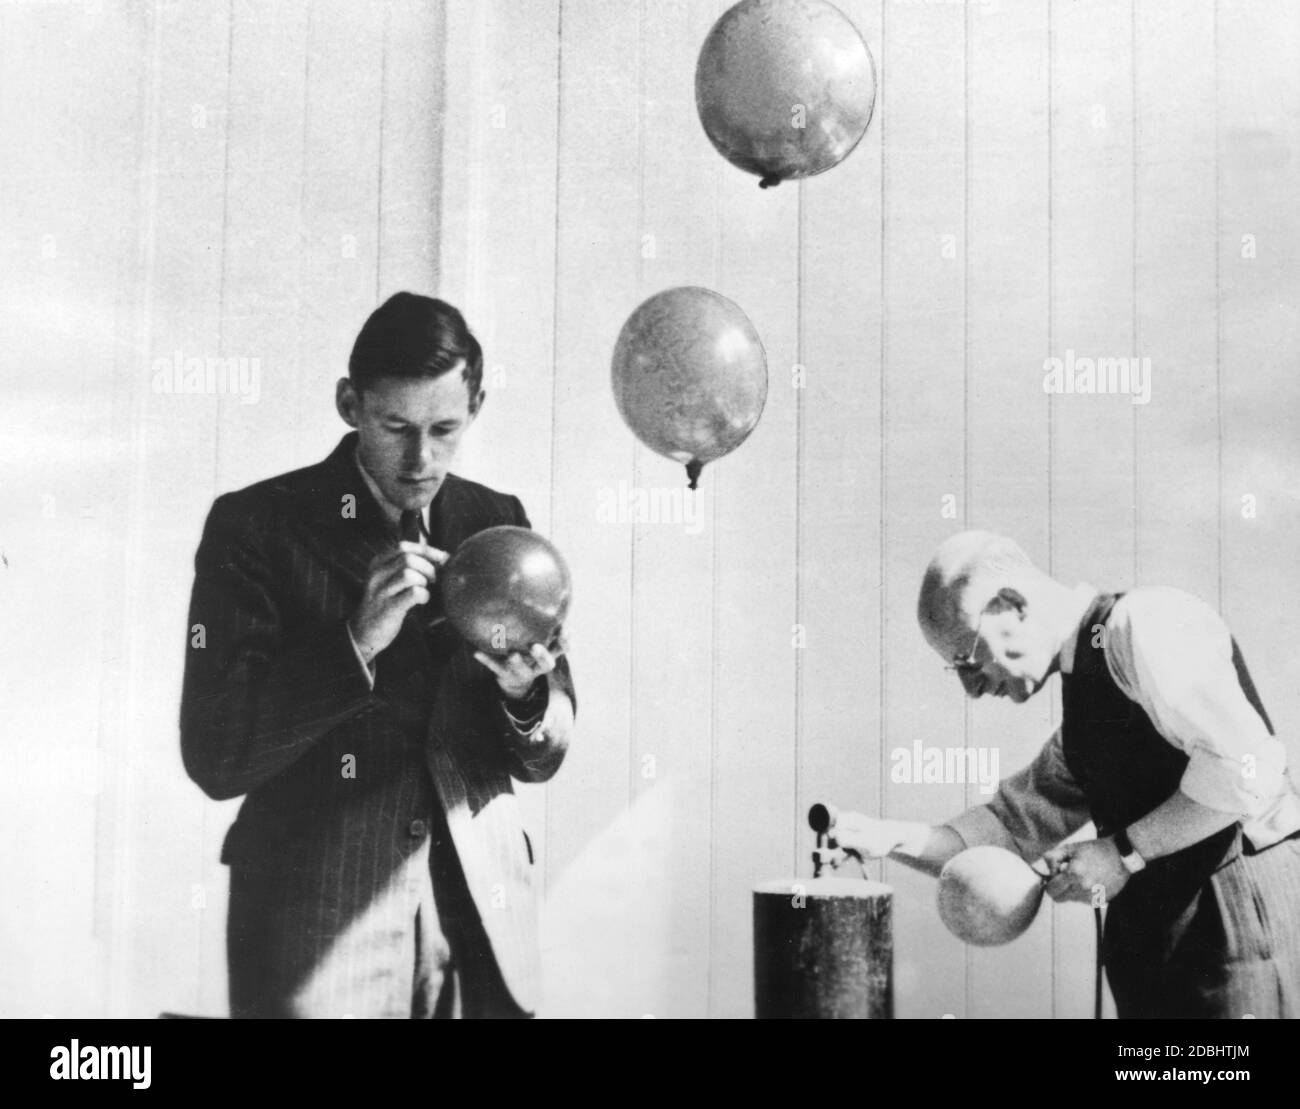 Investigadores ingleses usan globos para probar las corrientes de aire. Foto de stock